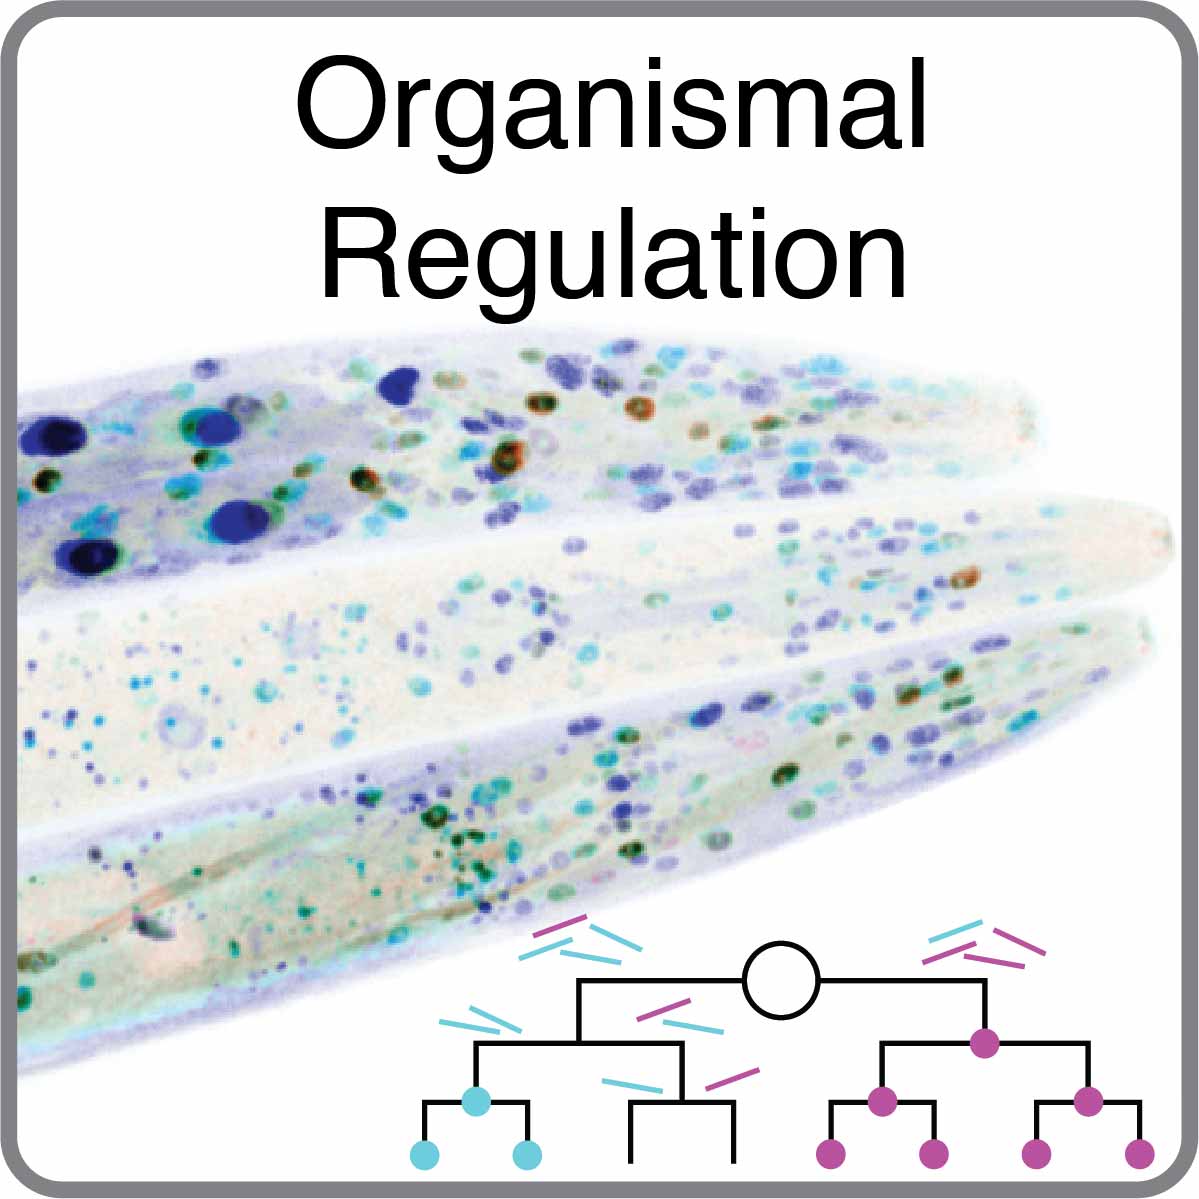 Organismal Regulation